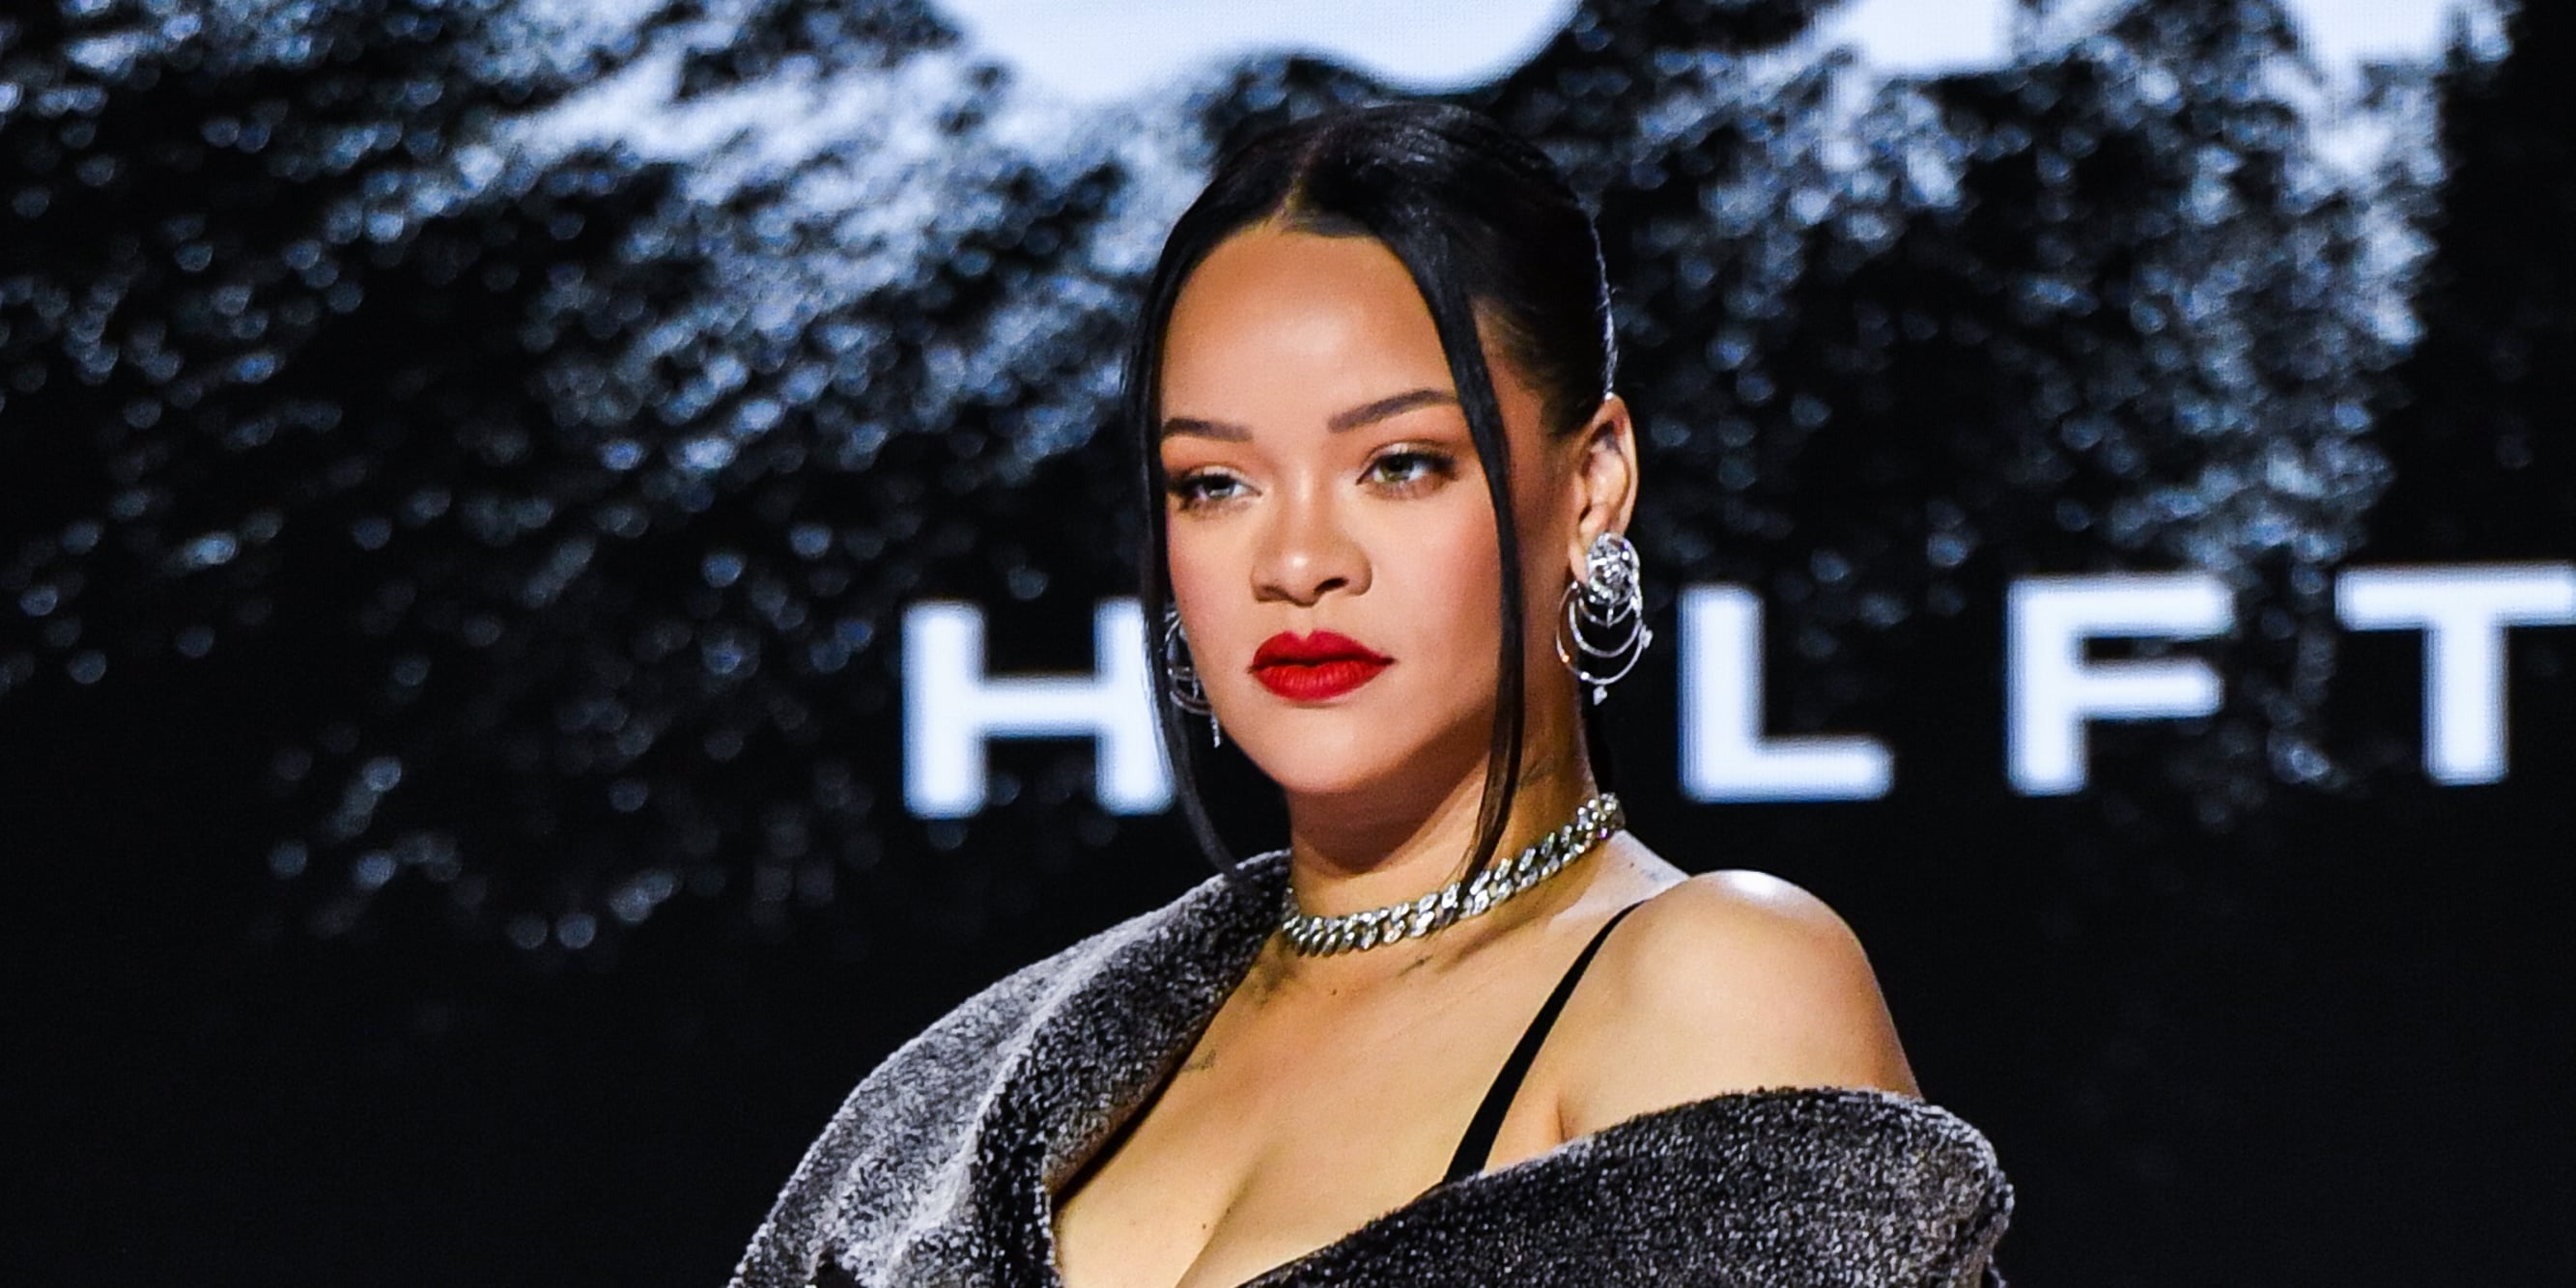 Rihanna Shares New Photo of Her Son Ahead of Oscars | POPSUGAR Celebrity